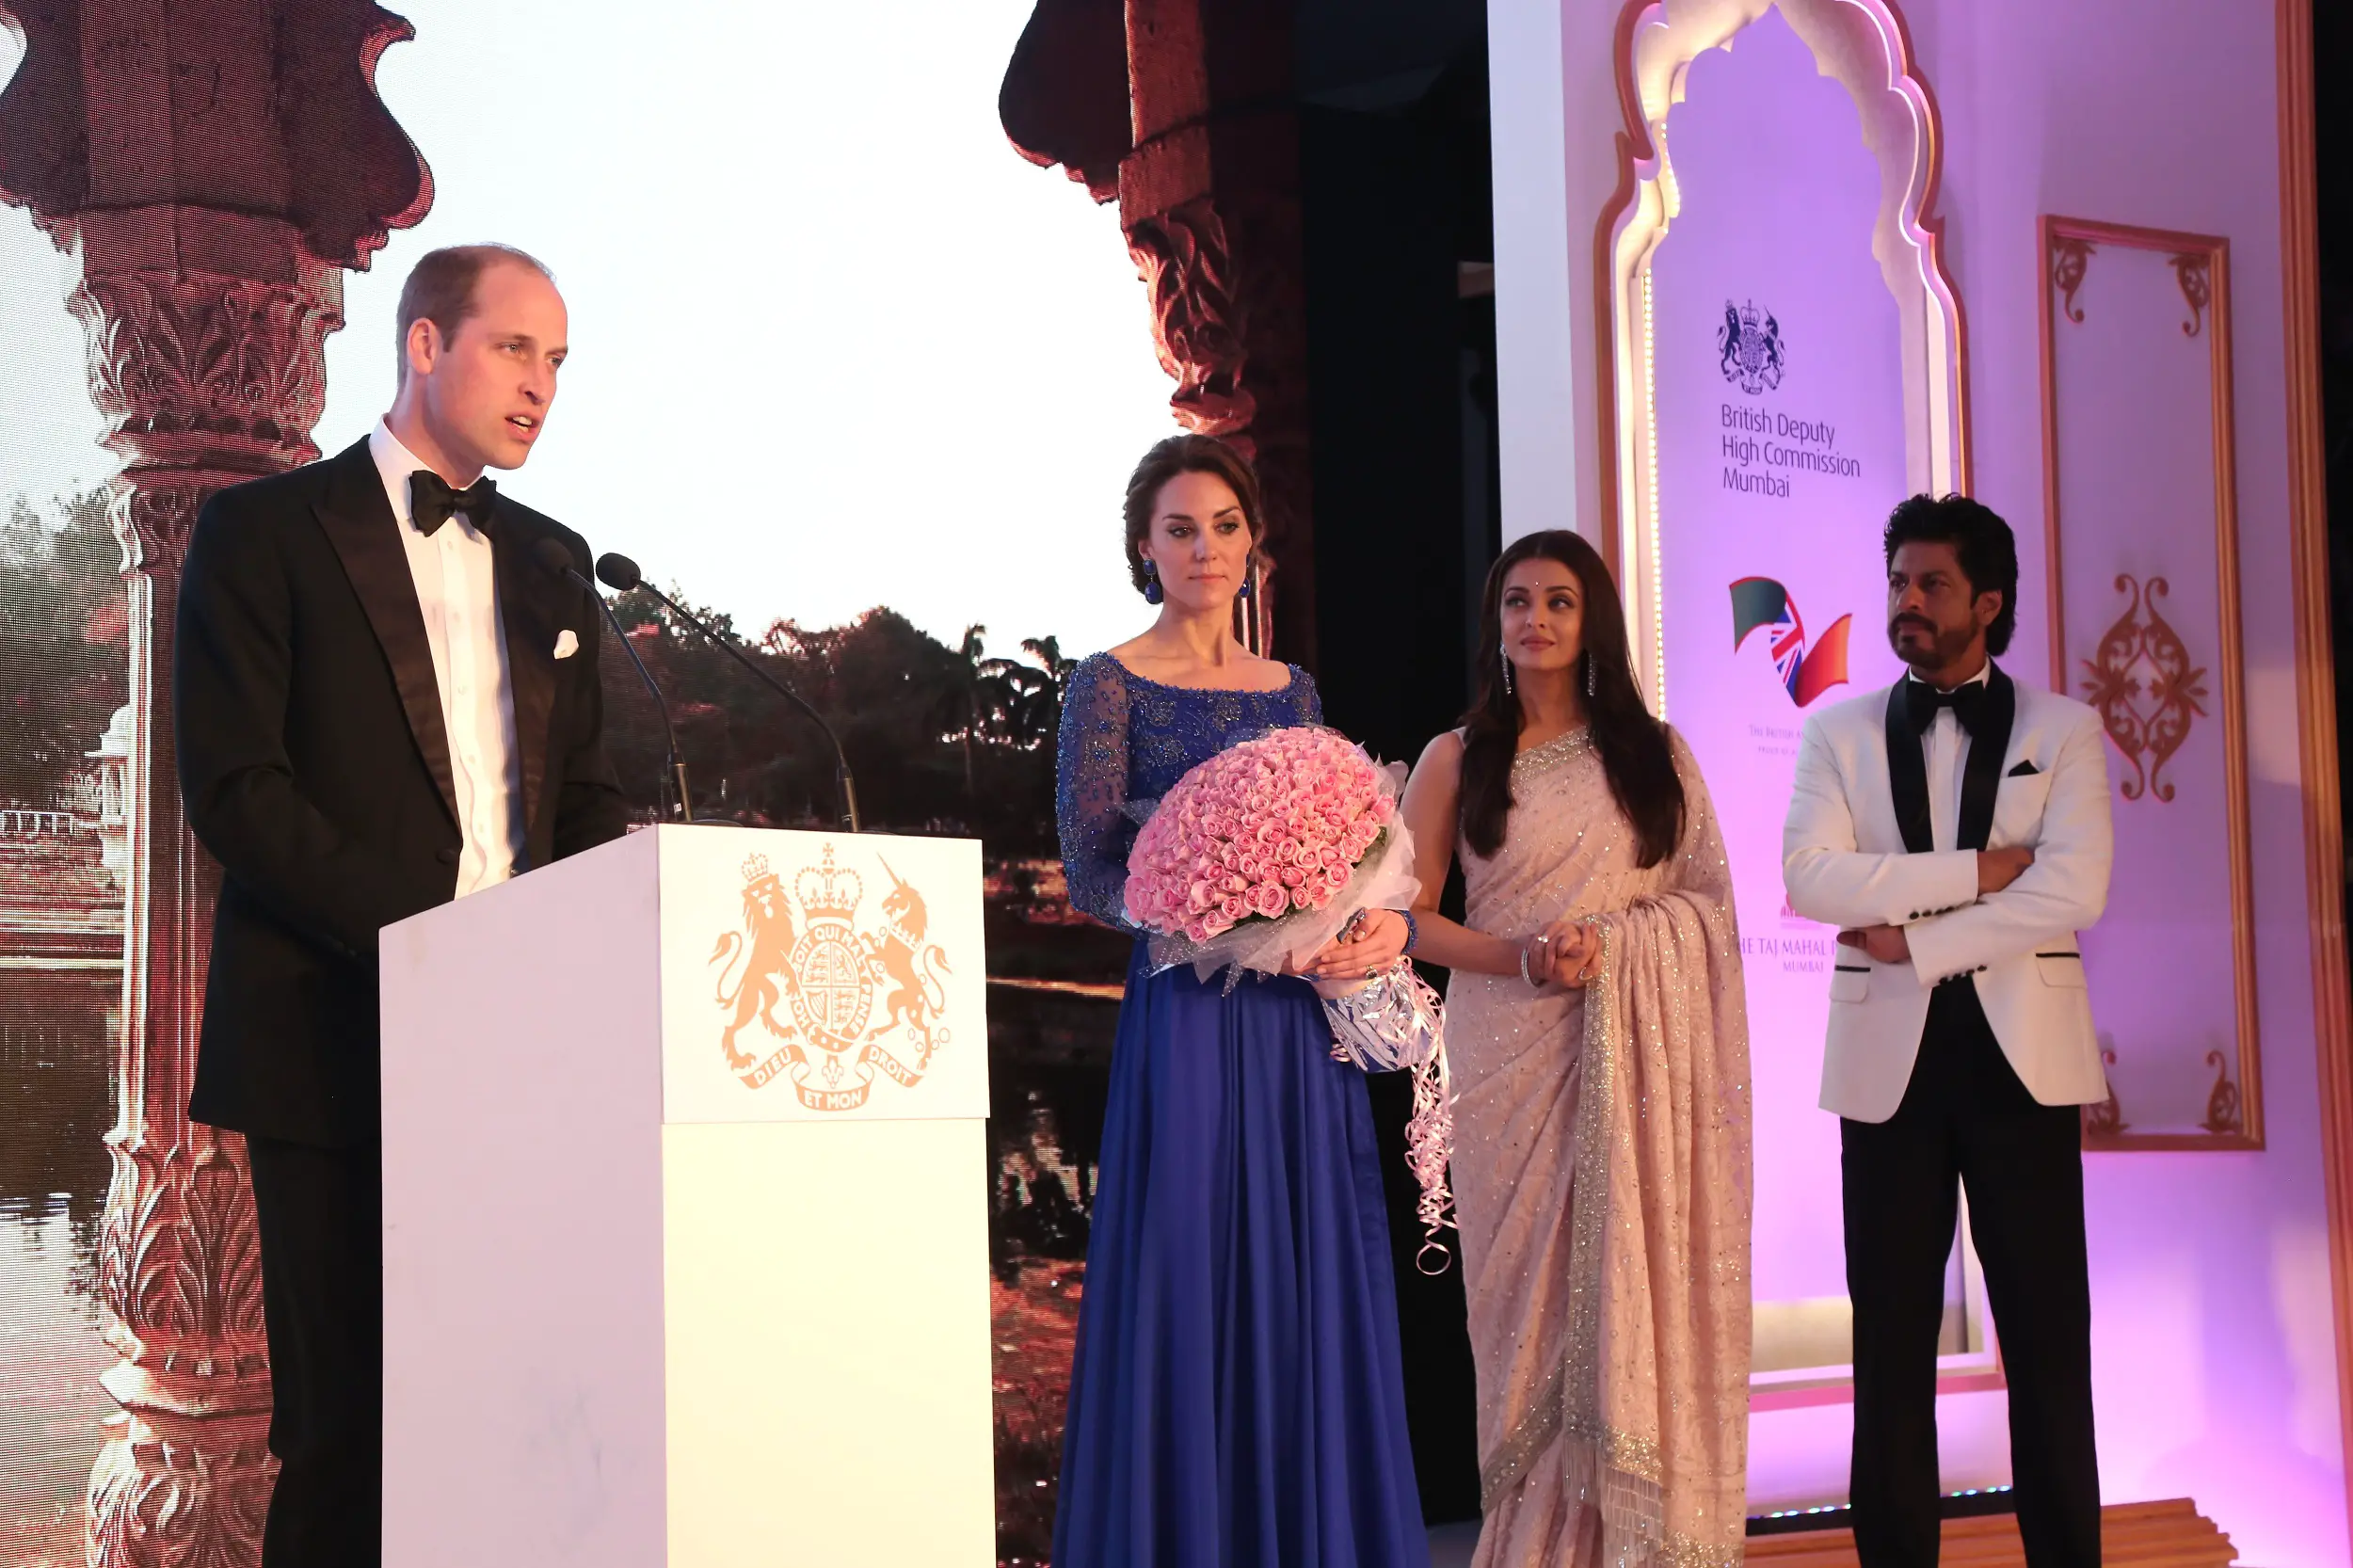 Prince William gave heartfelt speech at the Bollywood Gala